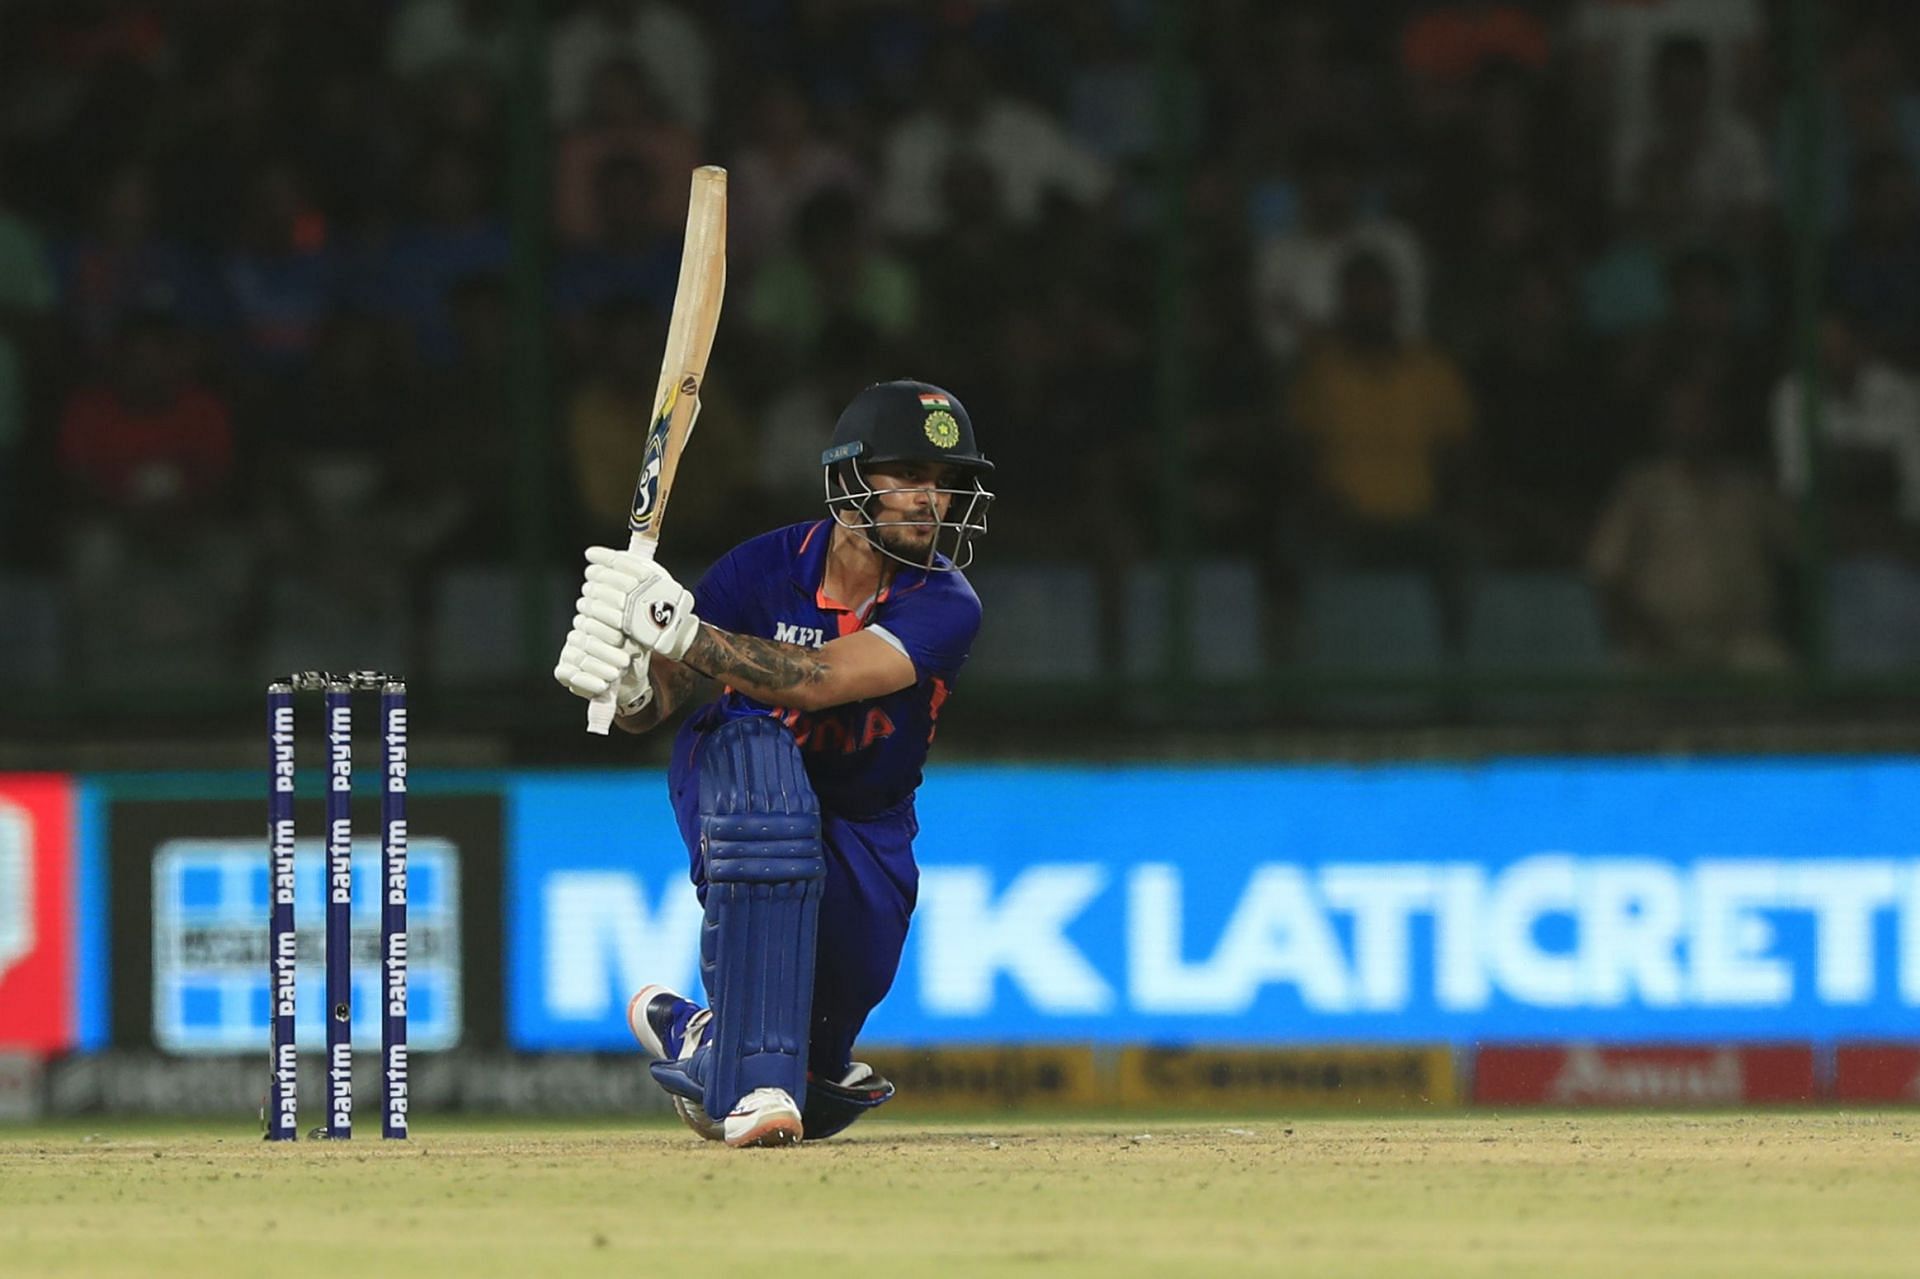 Ishan Kishan scored a fine half-century in the first T20I (Credit: BCCI)